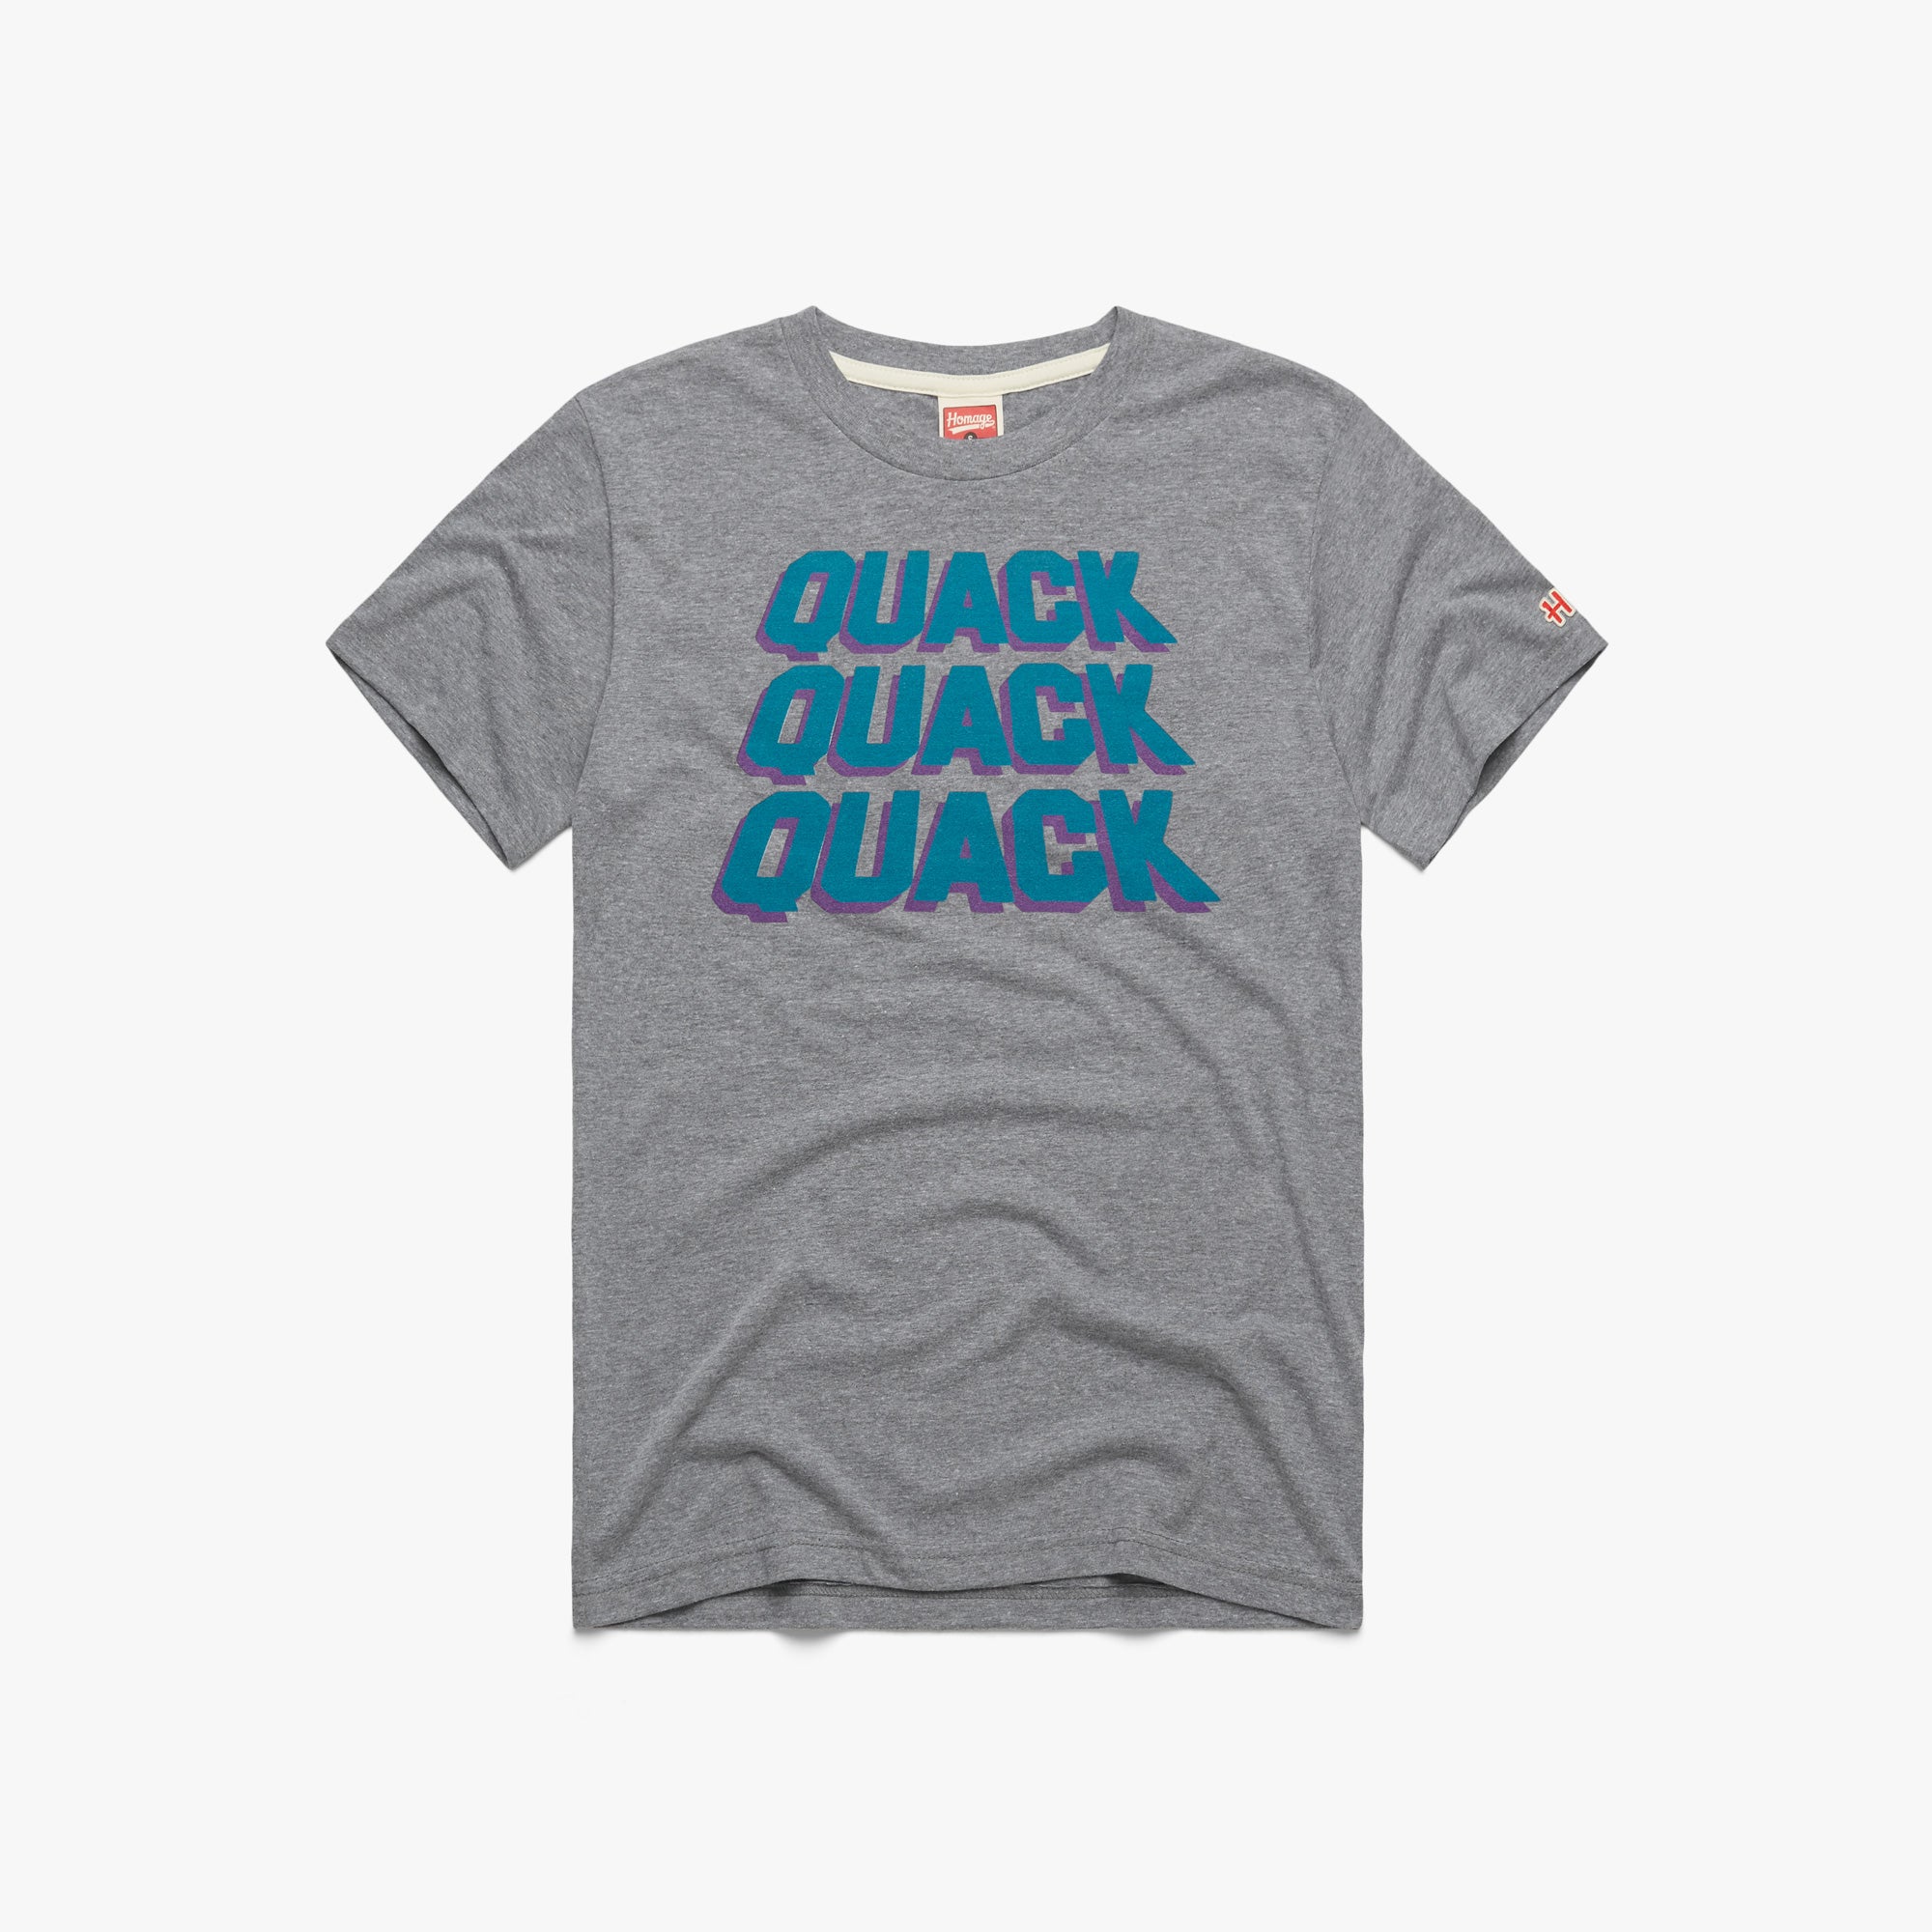 Mens Classic Mighty Ducks Shirt - The Mighty Ducks Tee Shirt - Gordon  Bombay & Charlie Conway Graphic T-Shirt